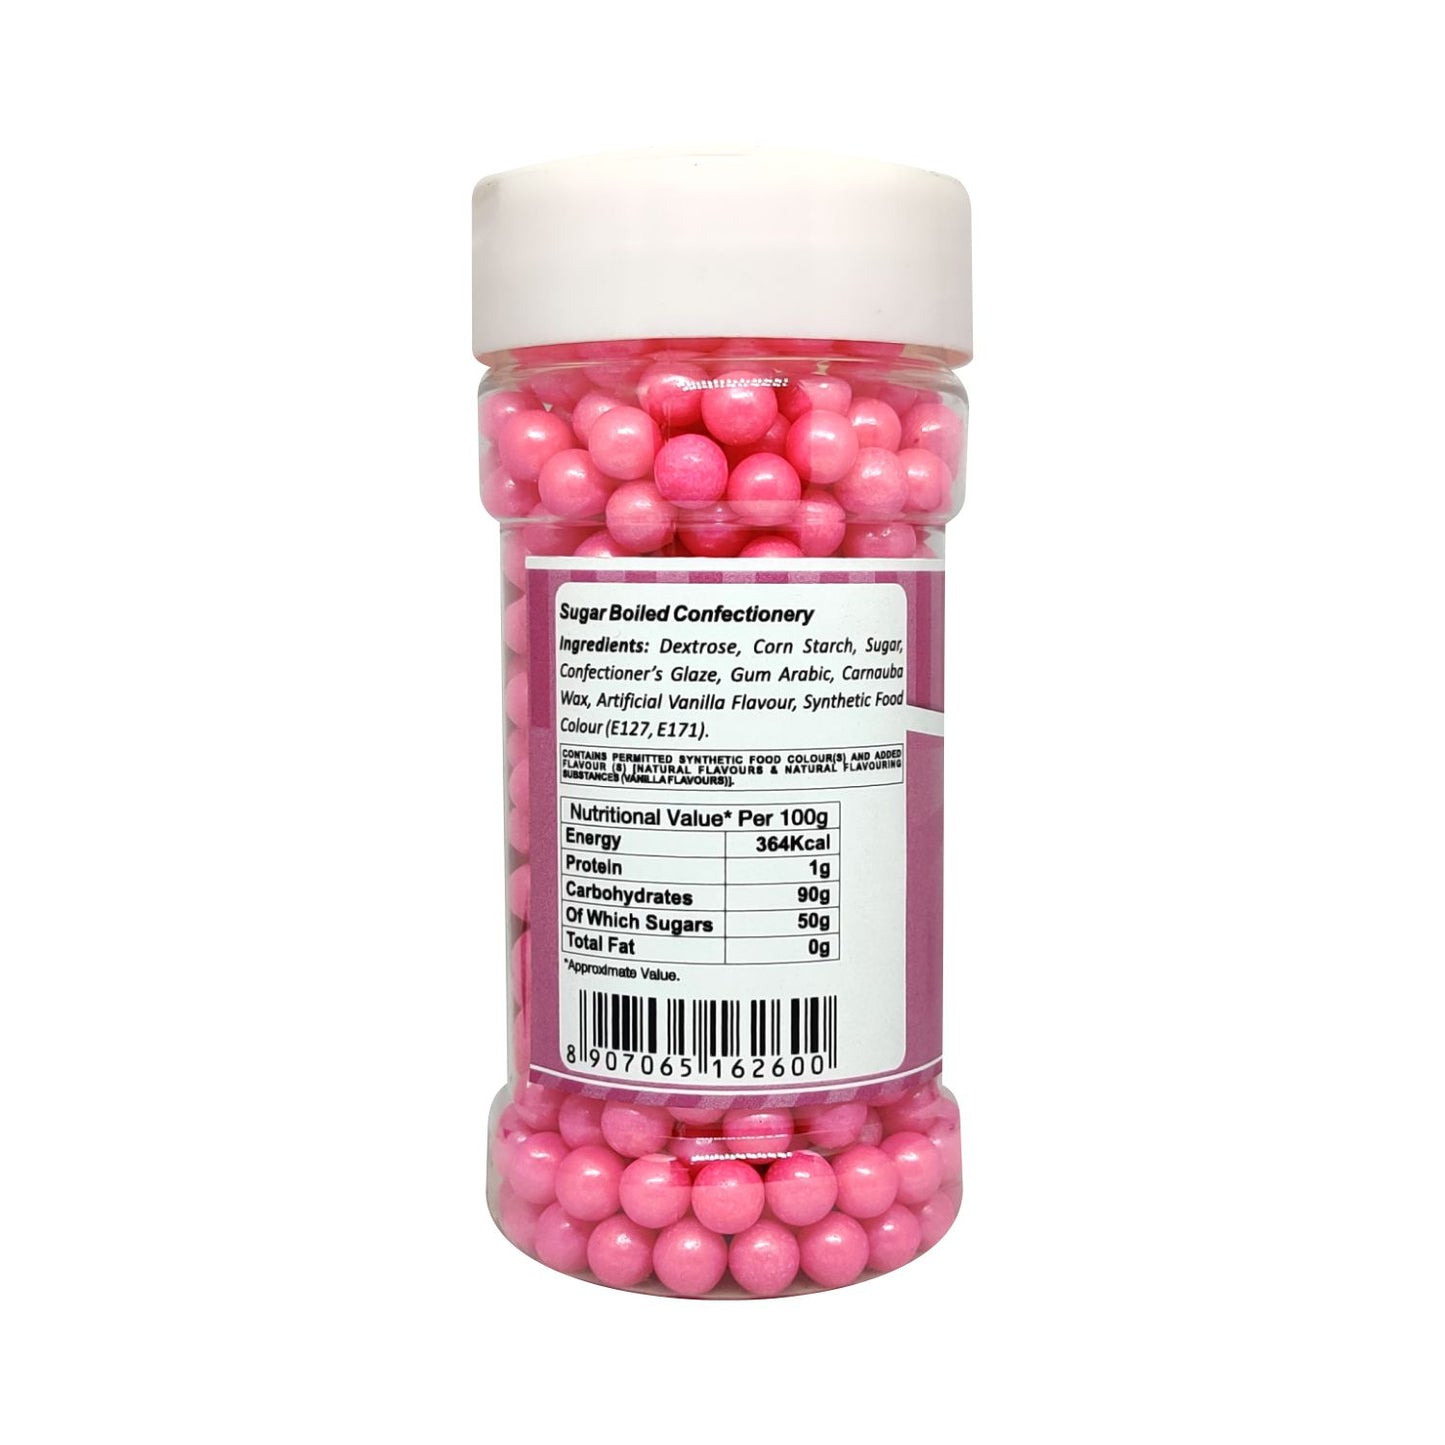 Puramio Glamour Balls Jumbo - Pink (7mm) | for Cake Decoration, 150g